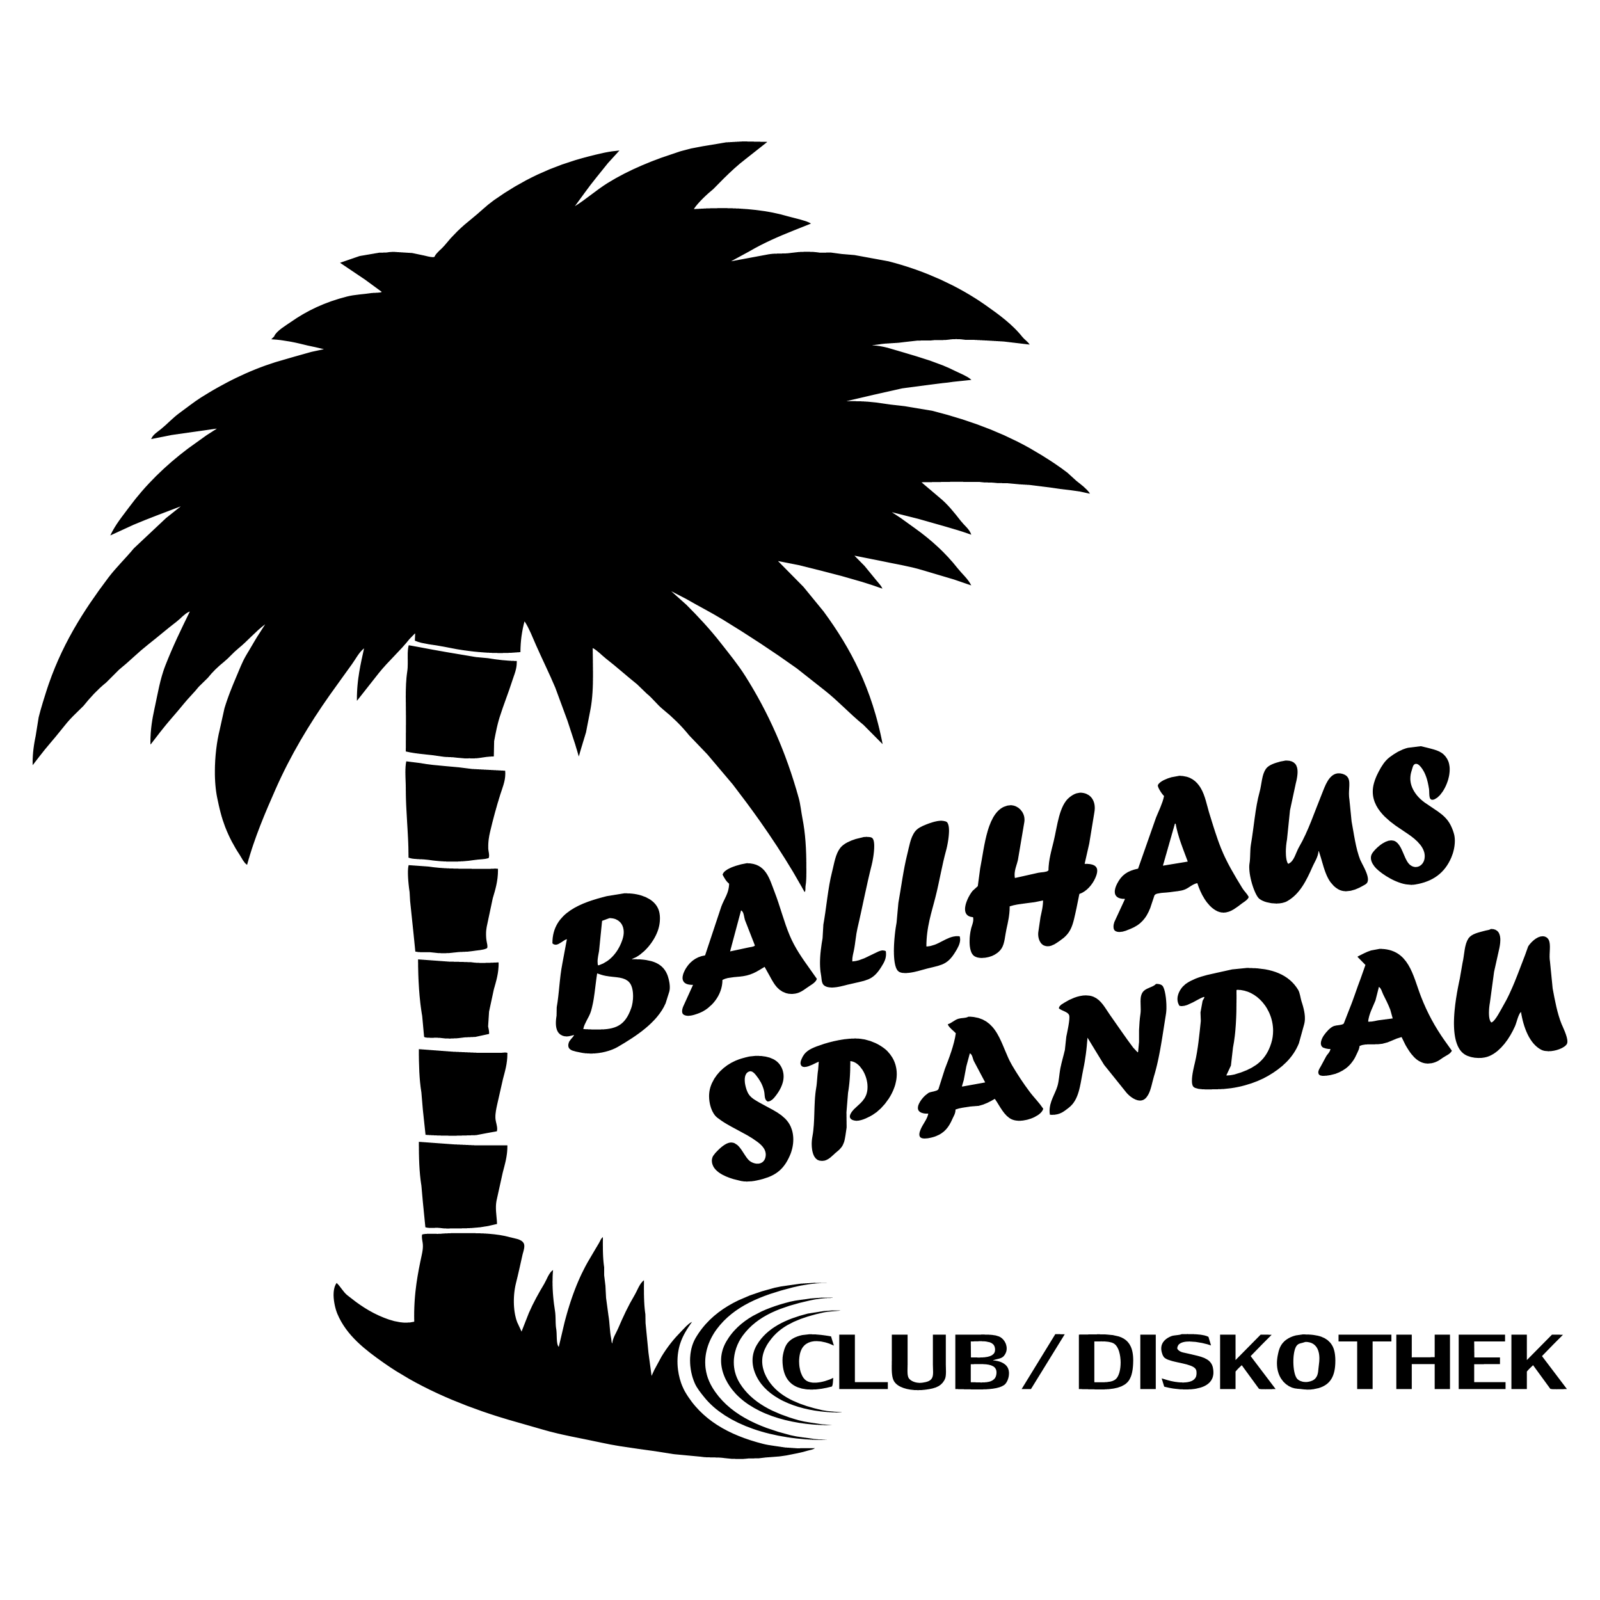 (c) Ballhaus-spandau.club